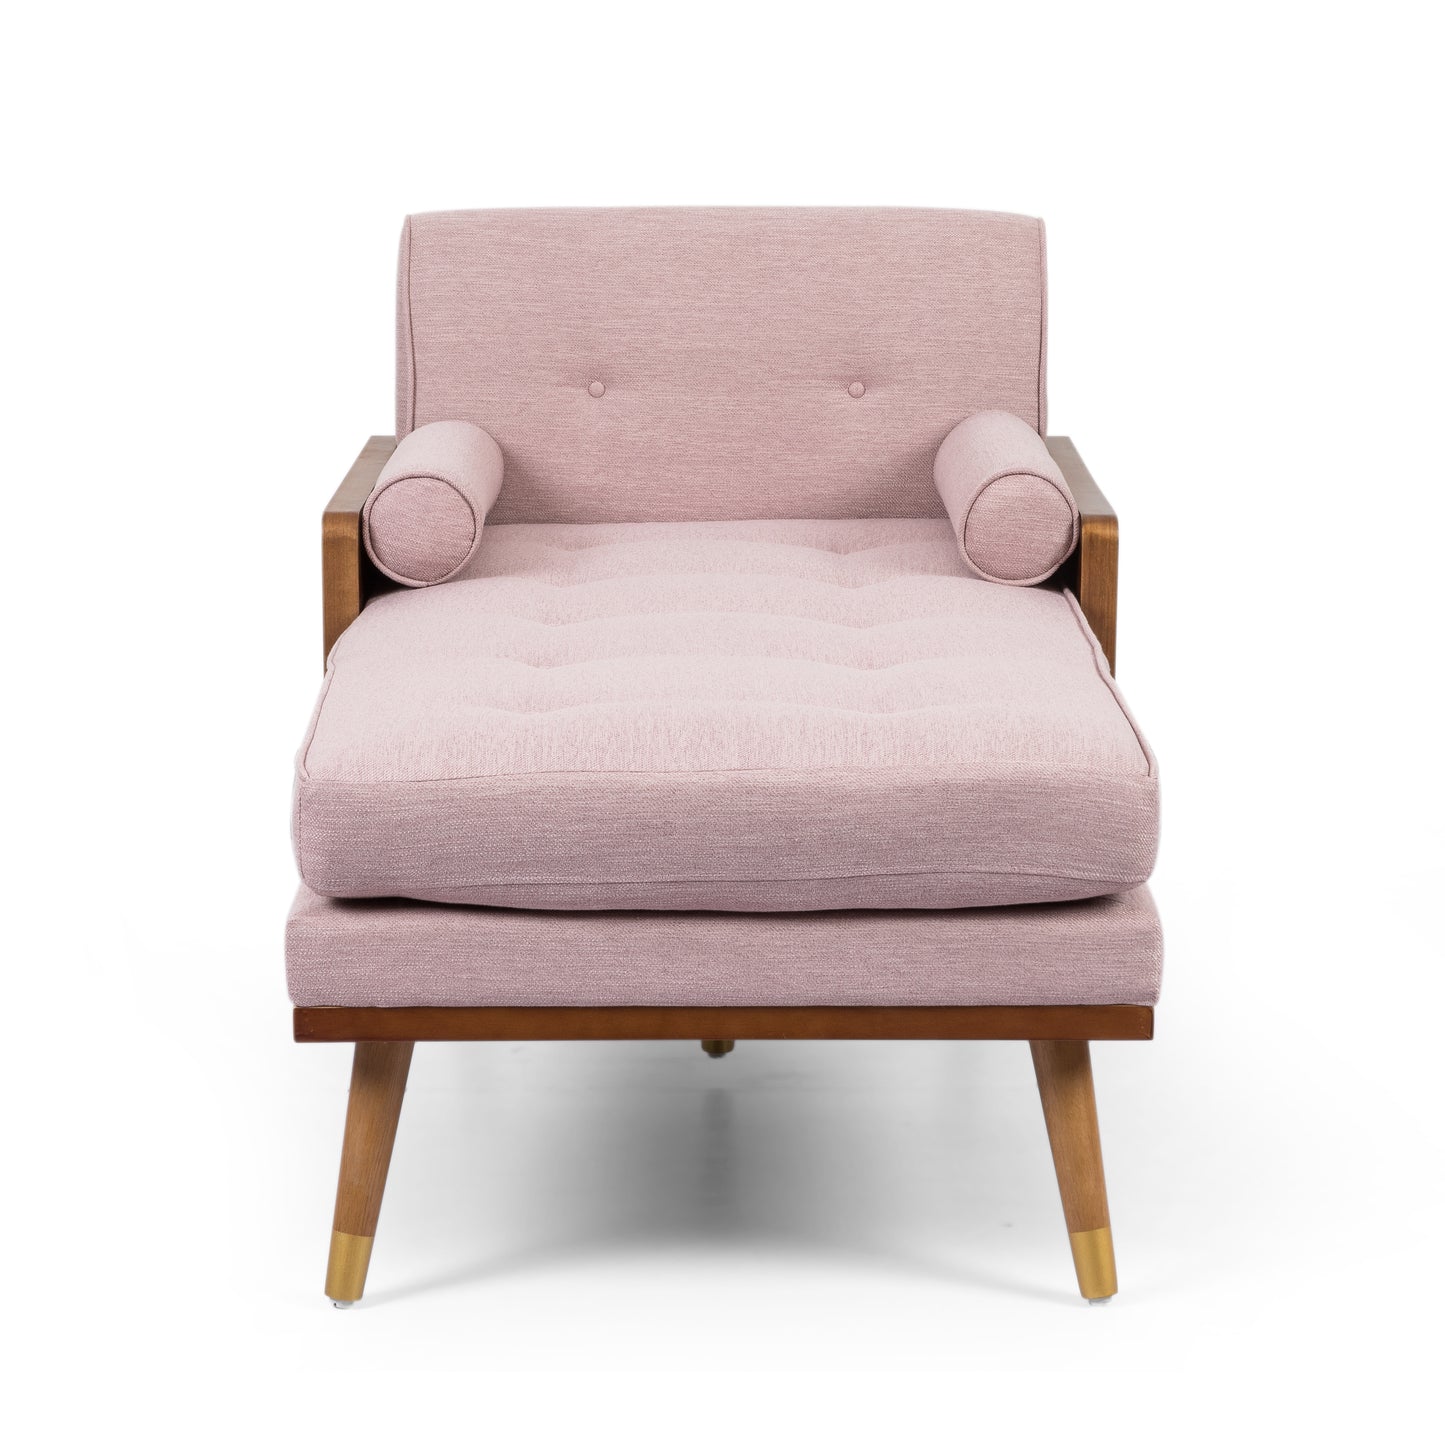 Pareesa Mid-Century Modern Fabric Chaise Lounge